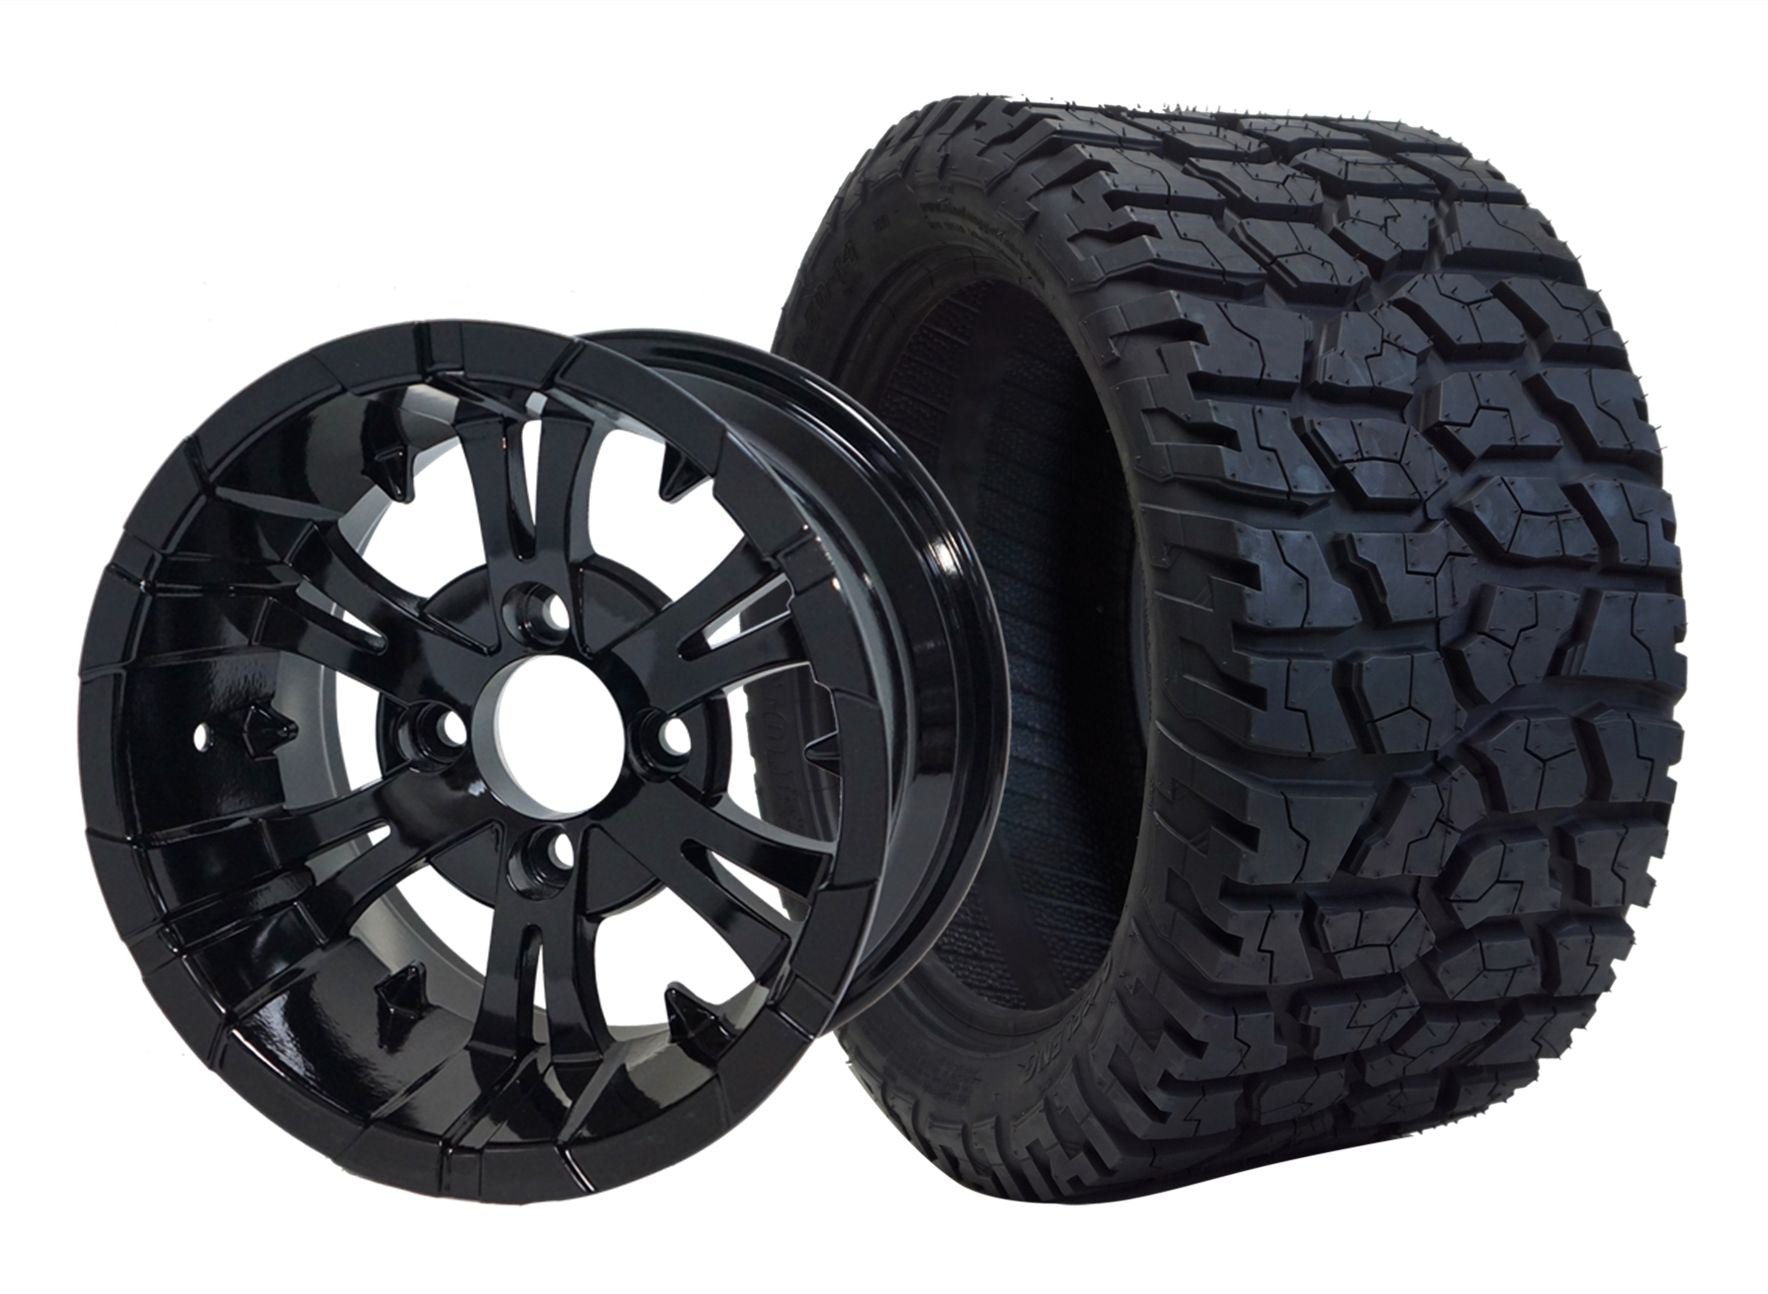 SGC 14" x 7" Vampire Glossy Black Wheel - Aluminum AlloySTEELENG 22"x10.5"-14" GATOR All Terrain Tire DOT Approved WH1414-TR1401